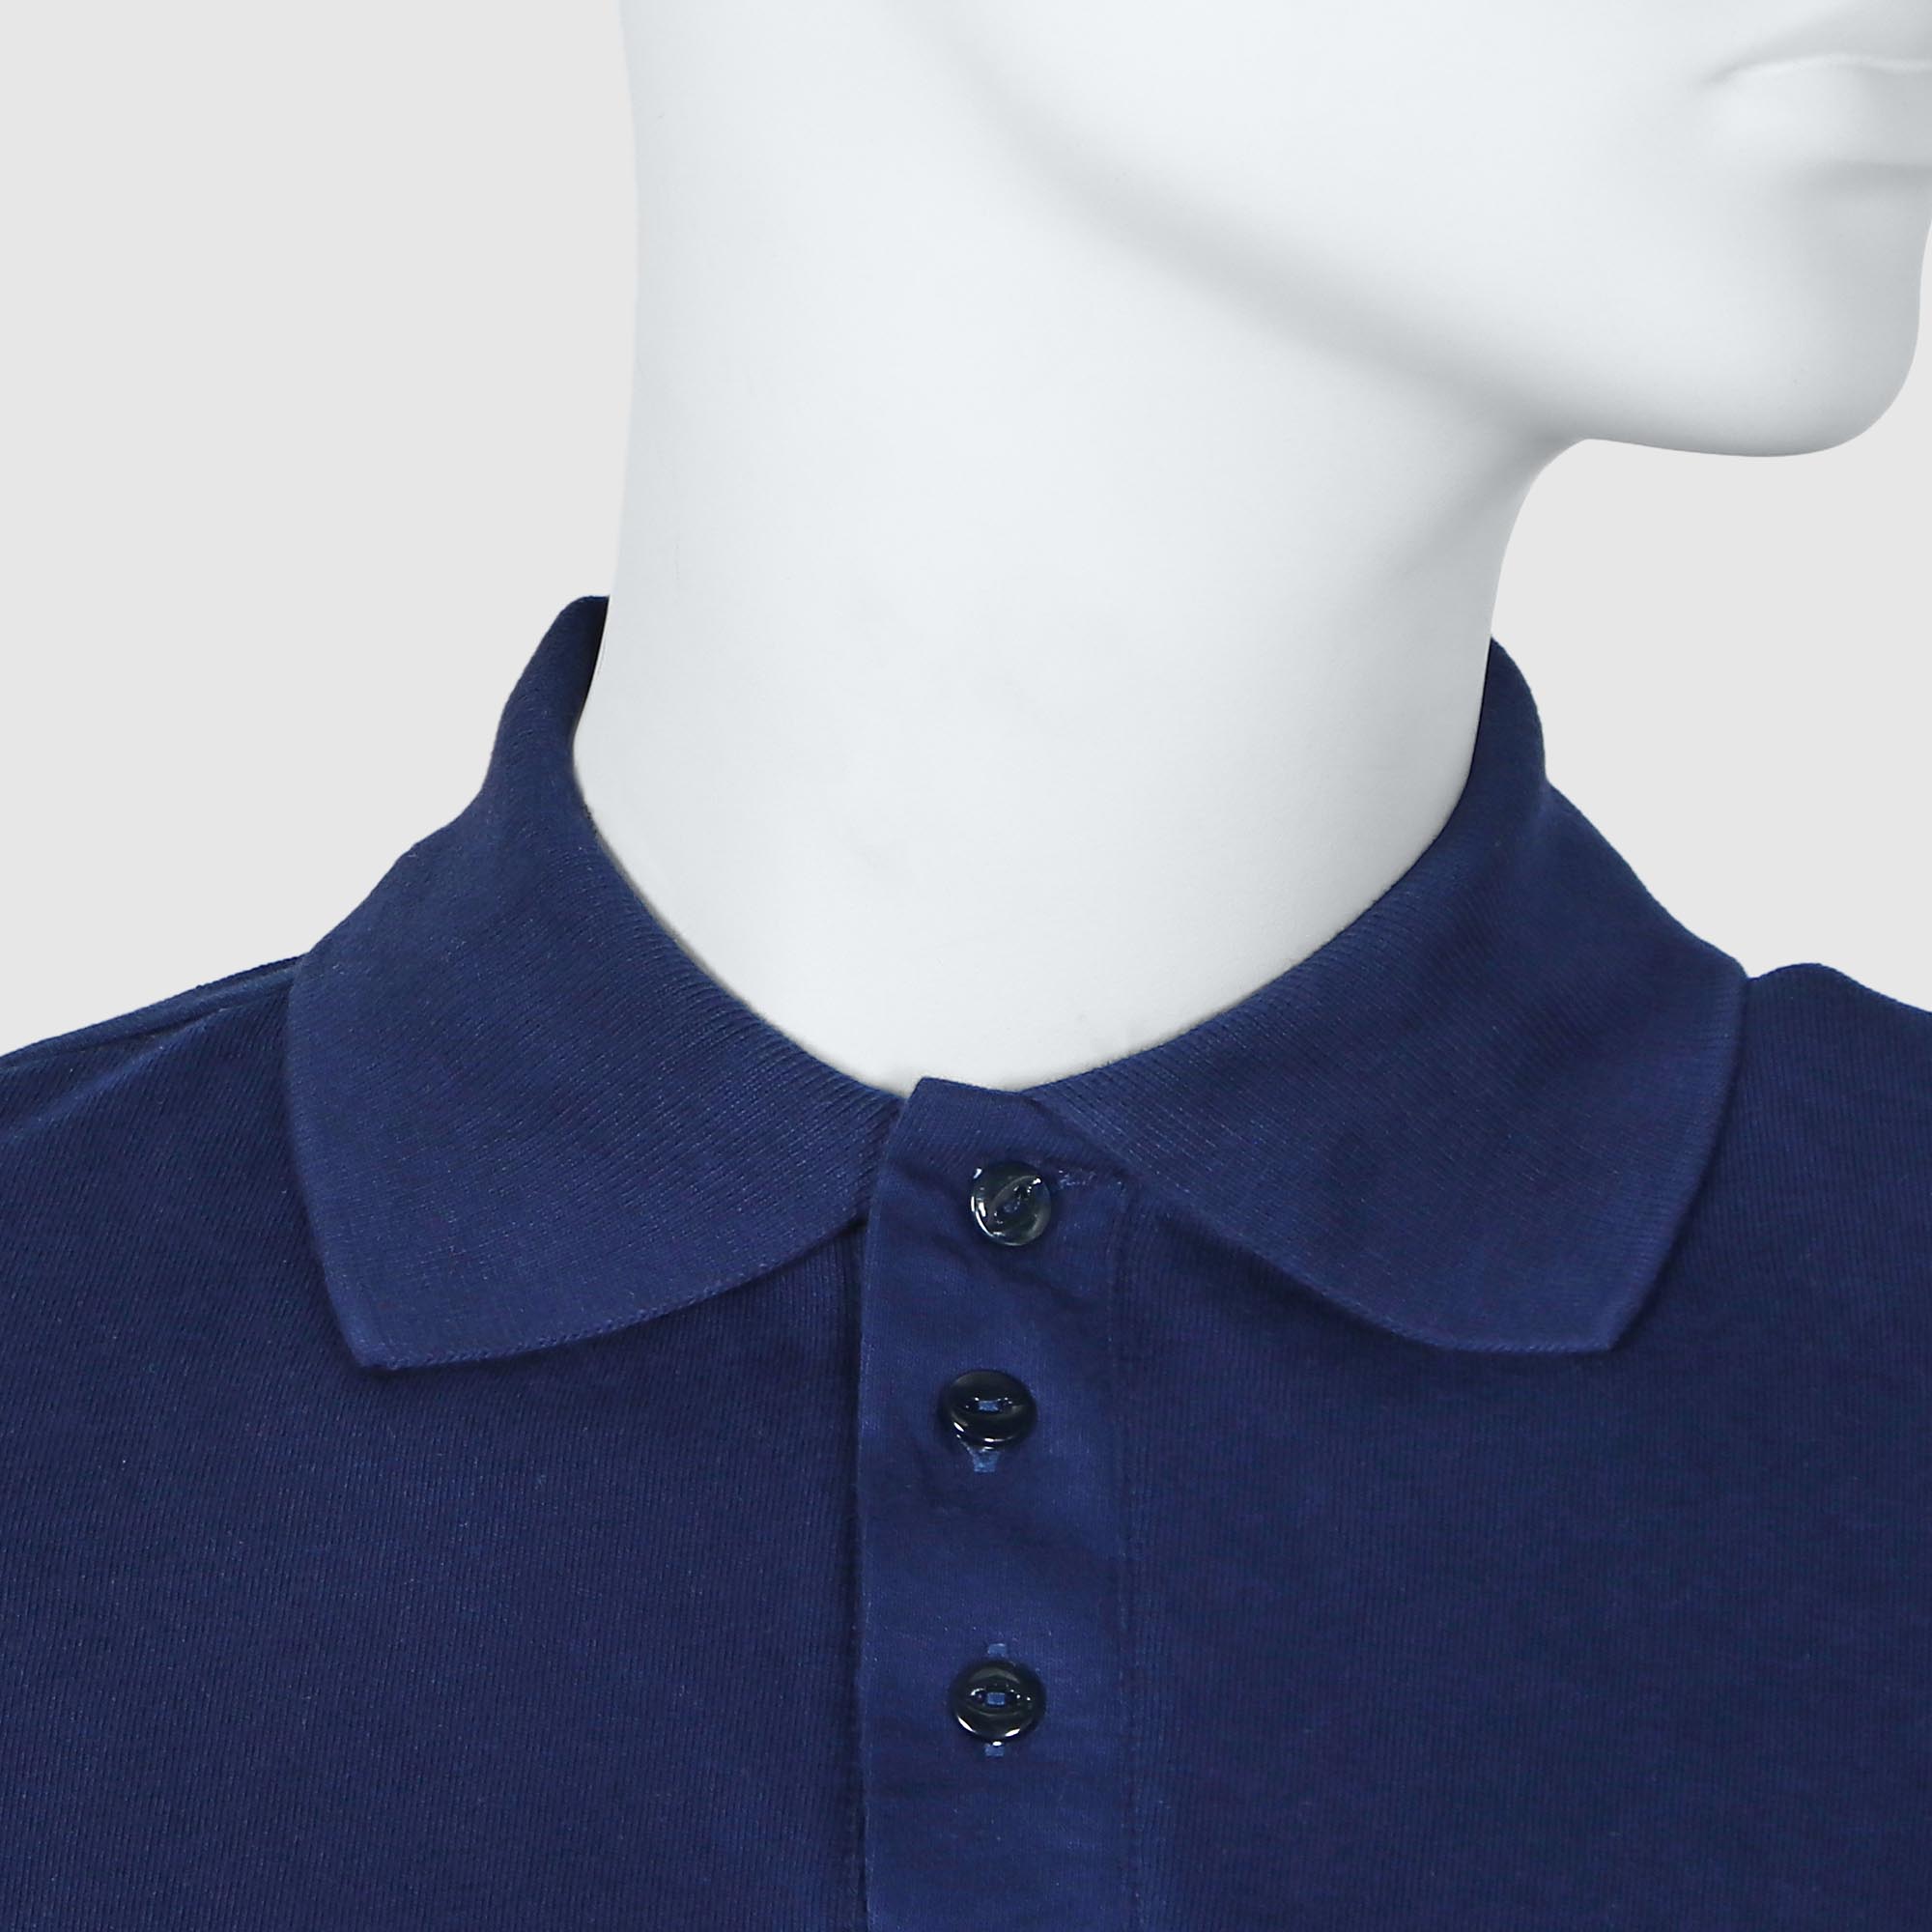 Мужская футболка-поло Diva Teks синяя (DTD-10), цвет синий, размер 46-48 - фото 4